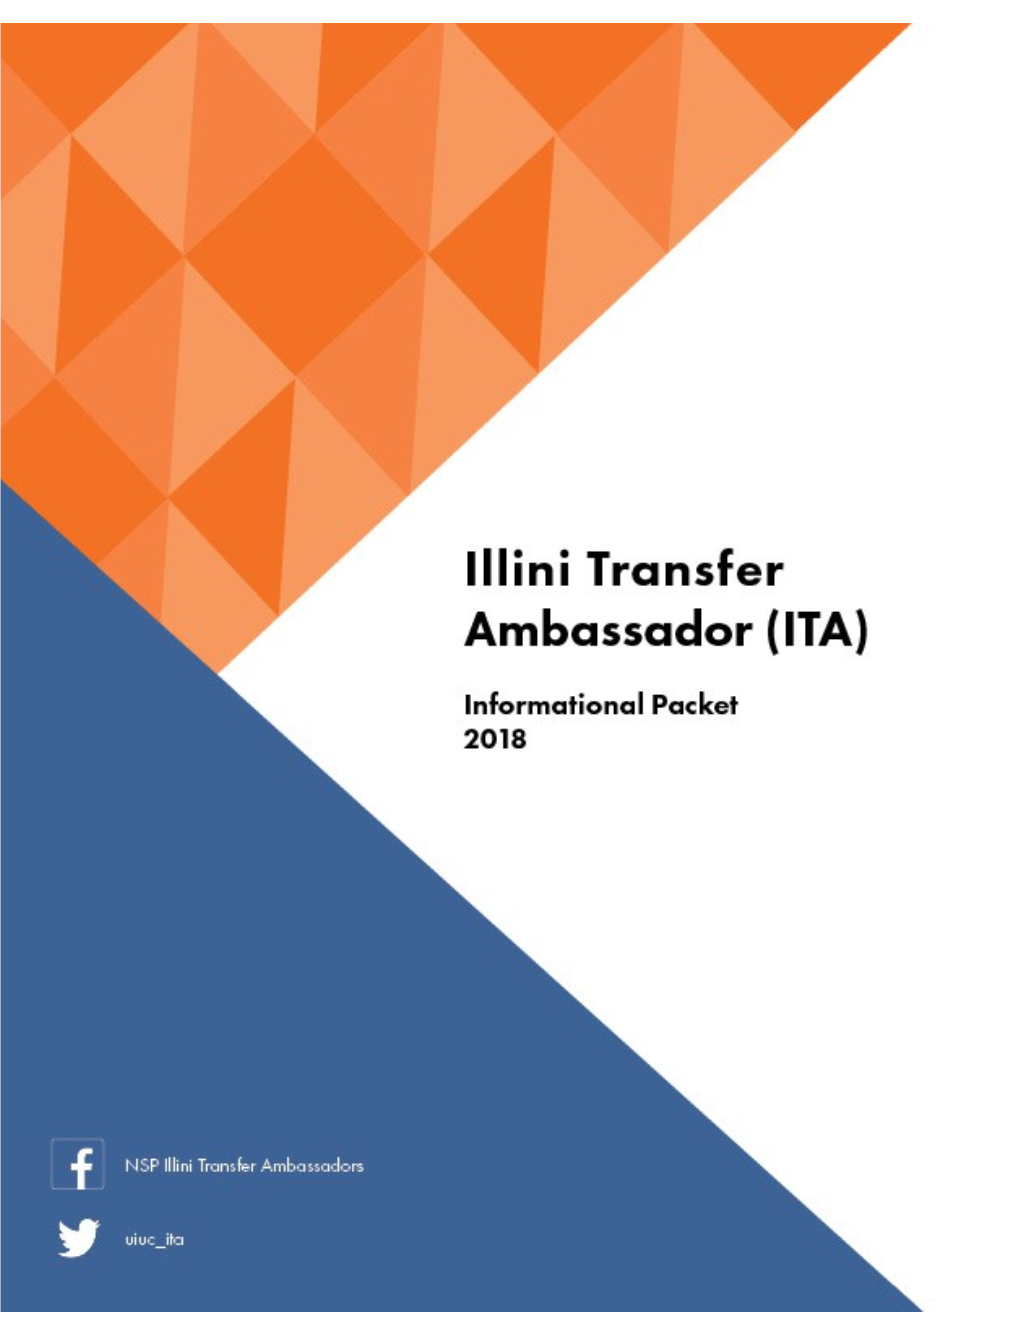 Illini Transfer Ambassador (ITA) Informational Packet